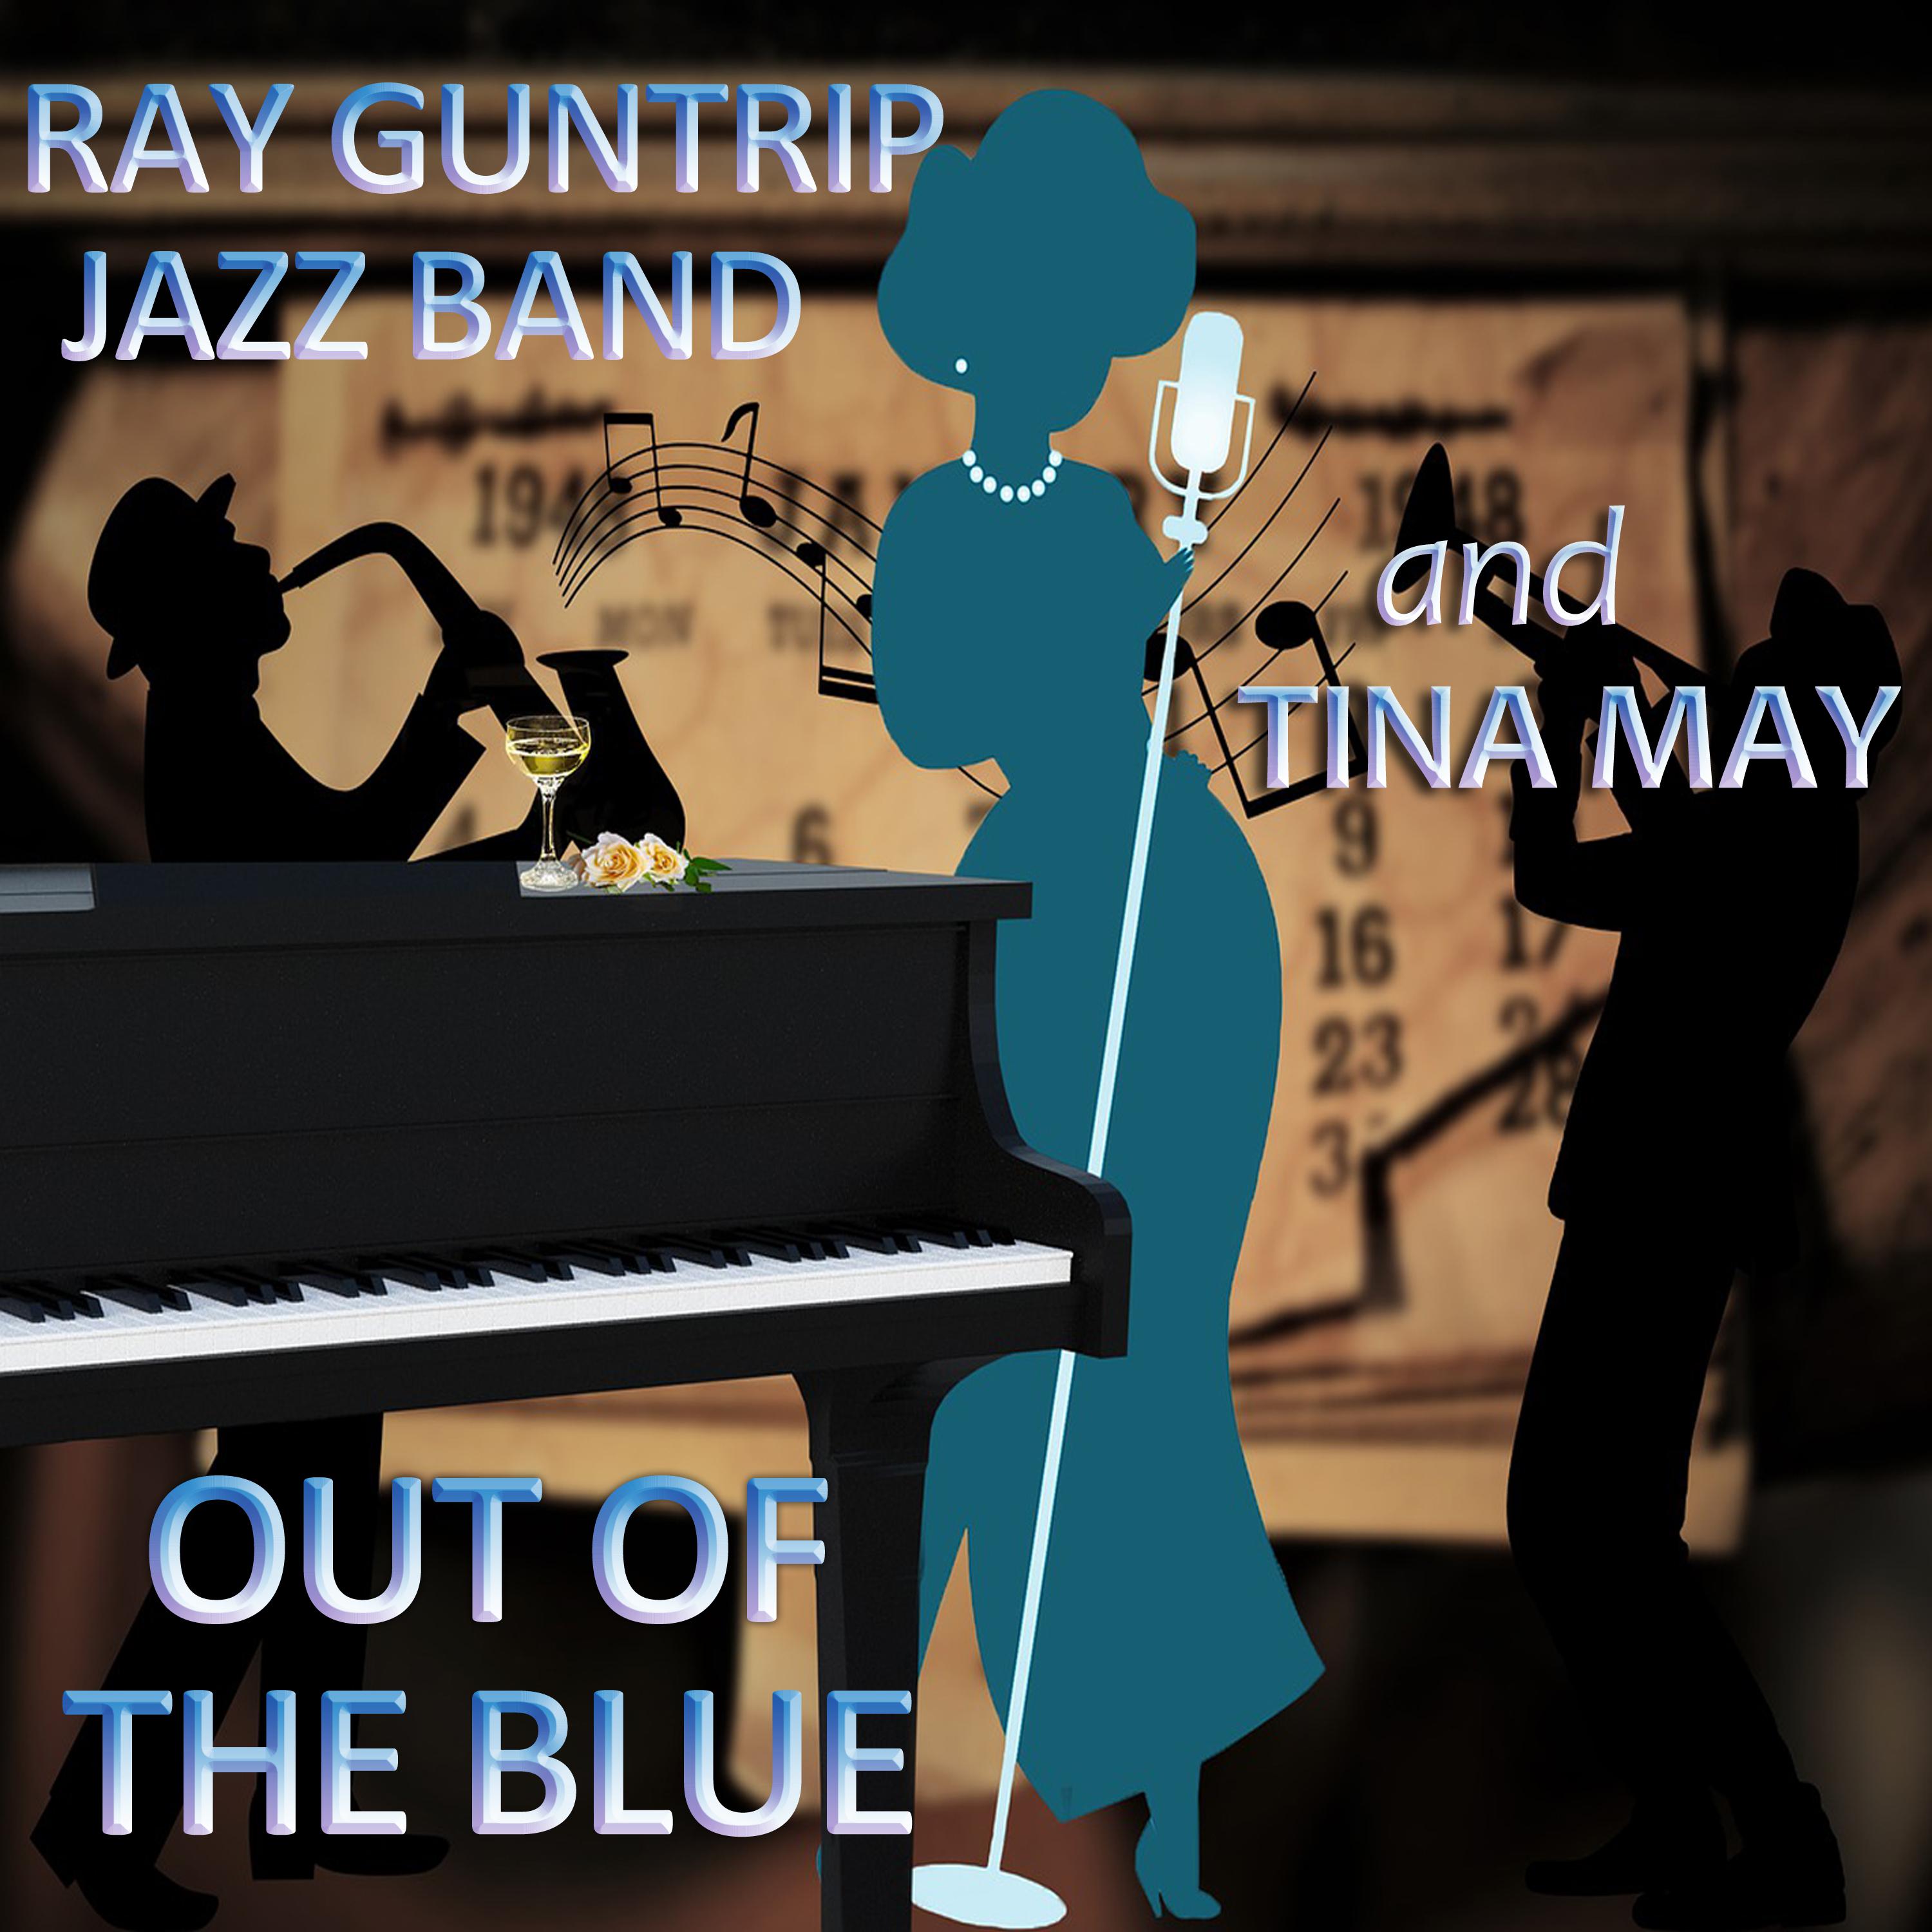 Raymond Guntrip - Out of the Blue